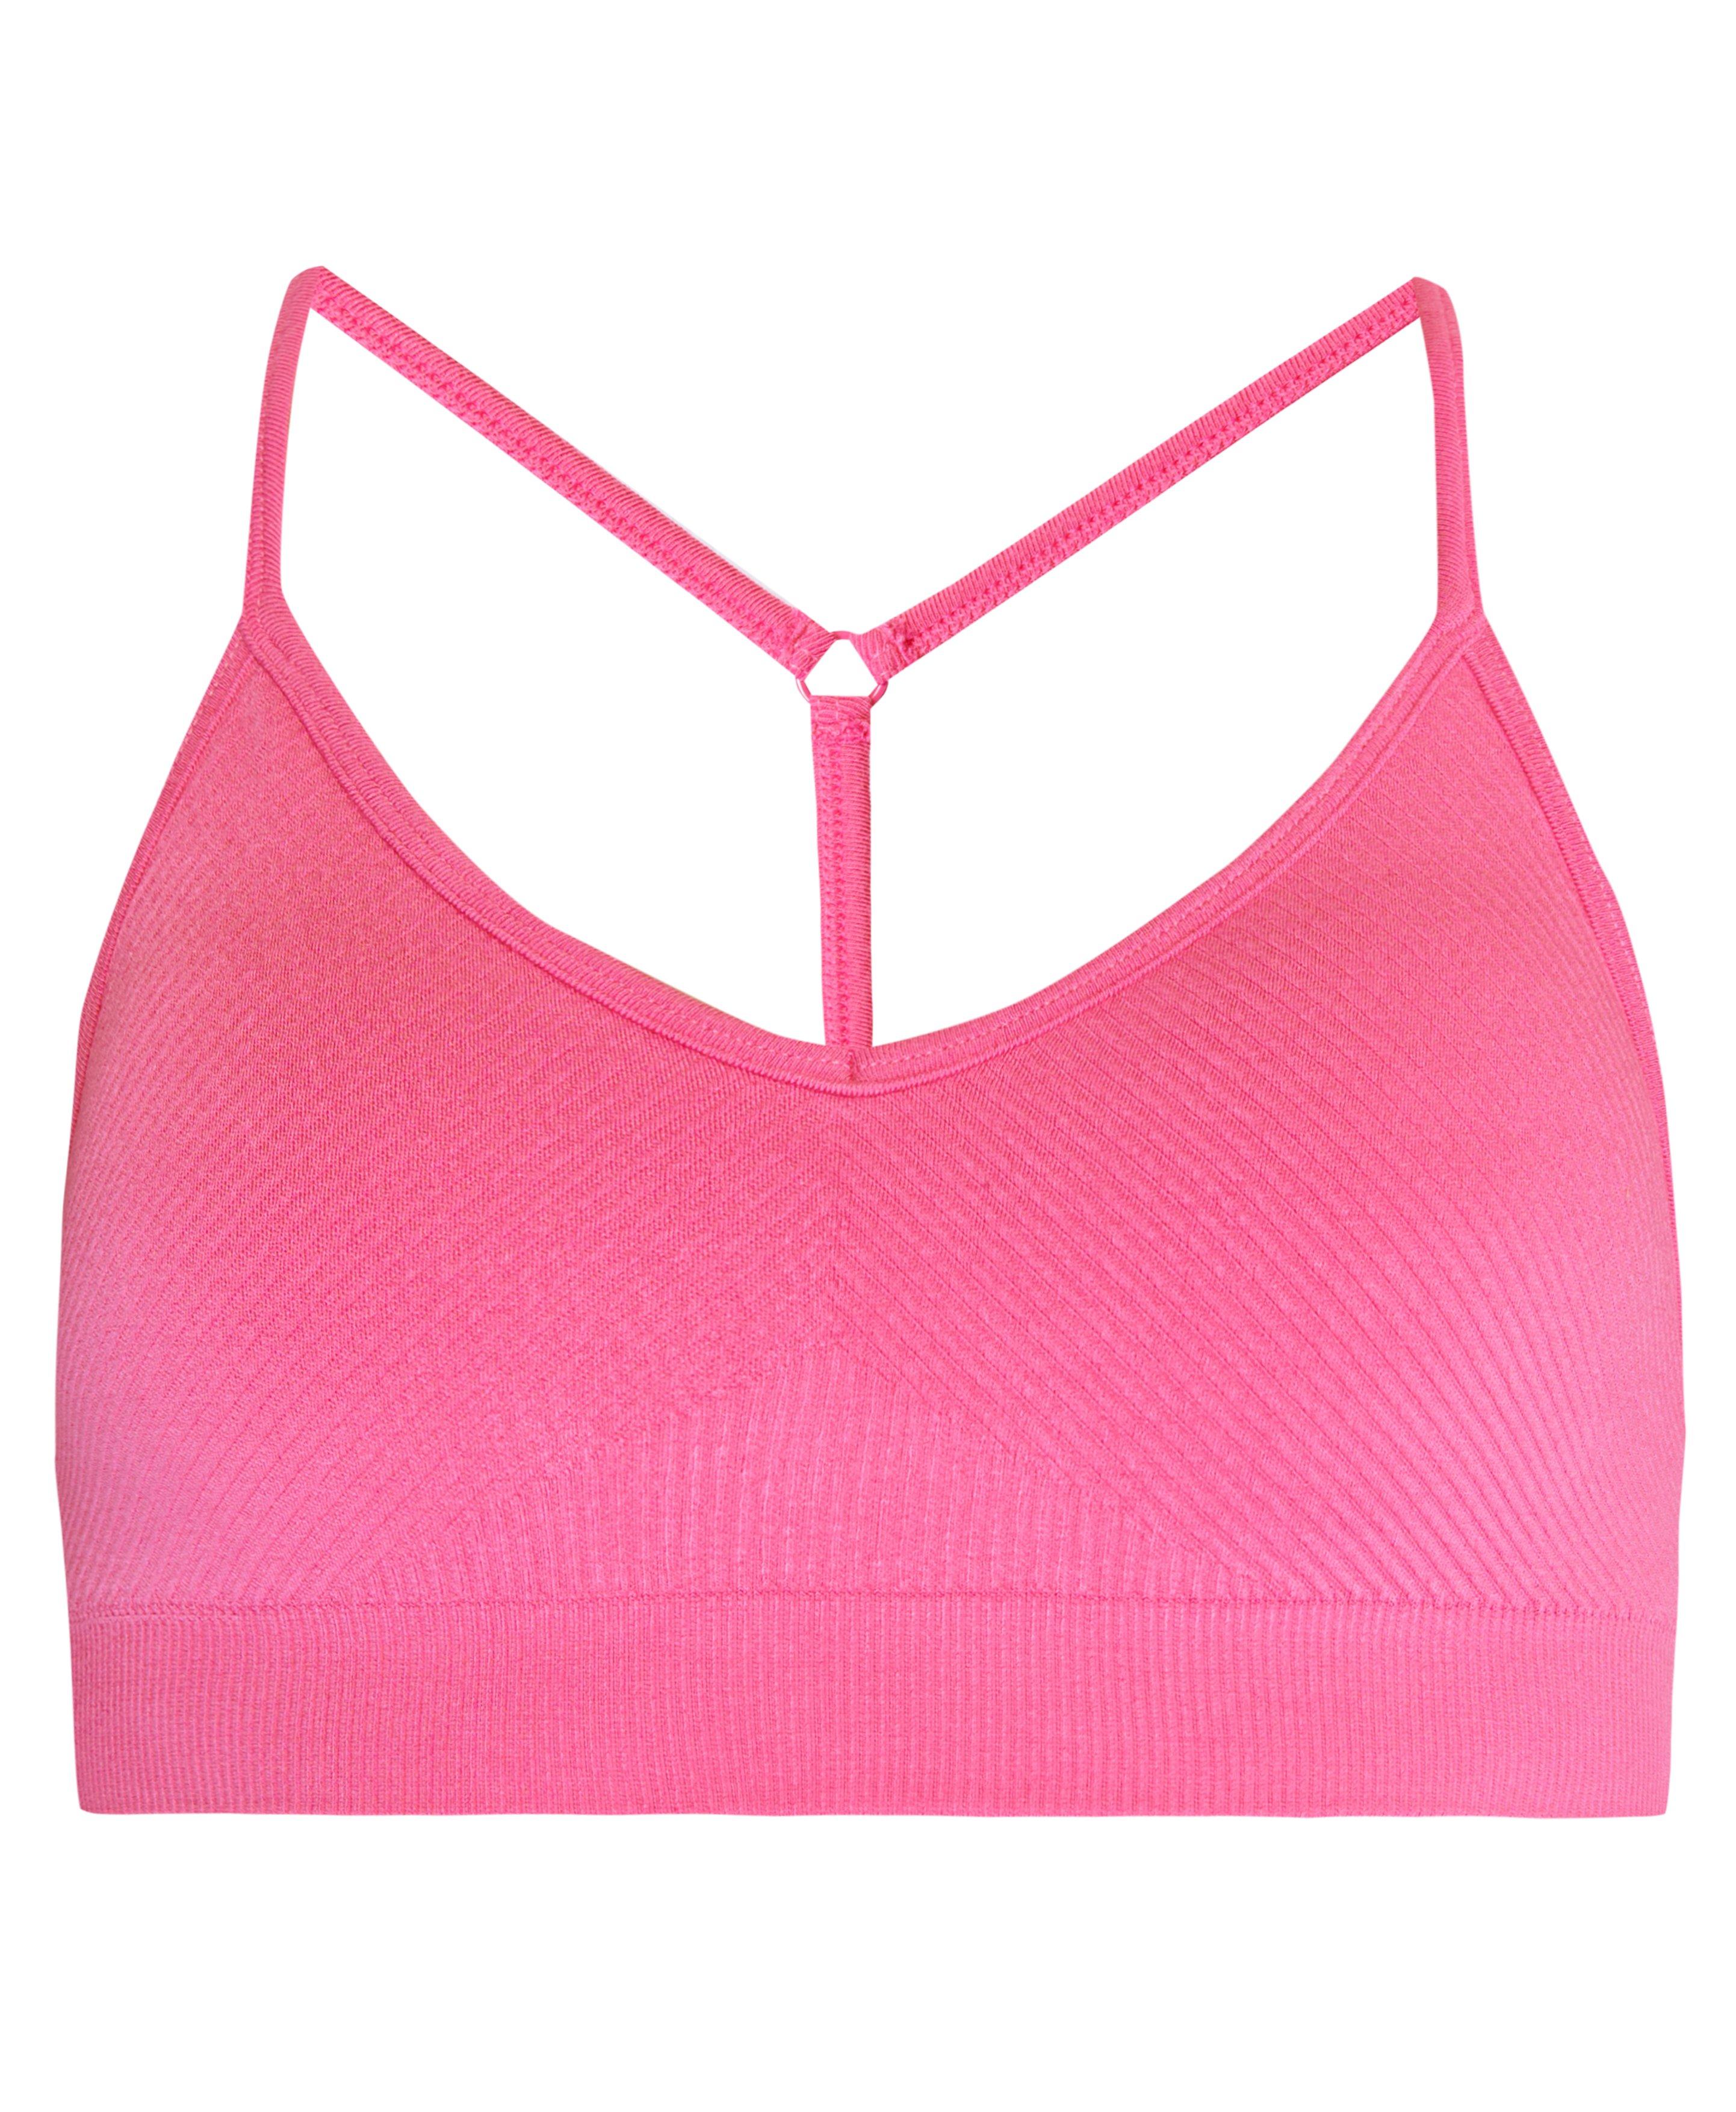 Guess Light support sports bra - white/pink/white - Zalando.de